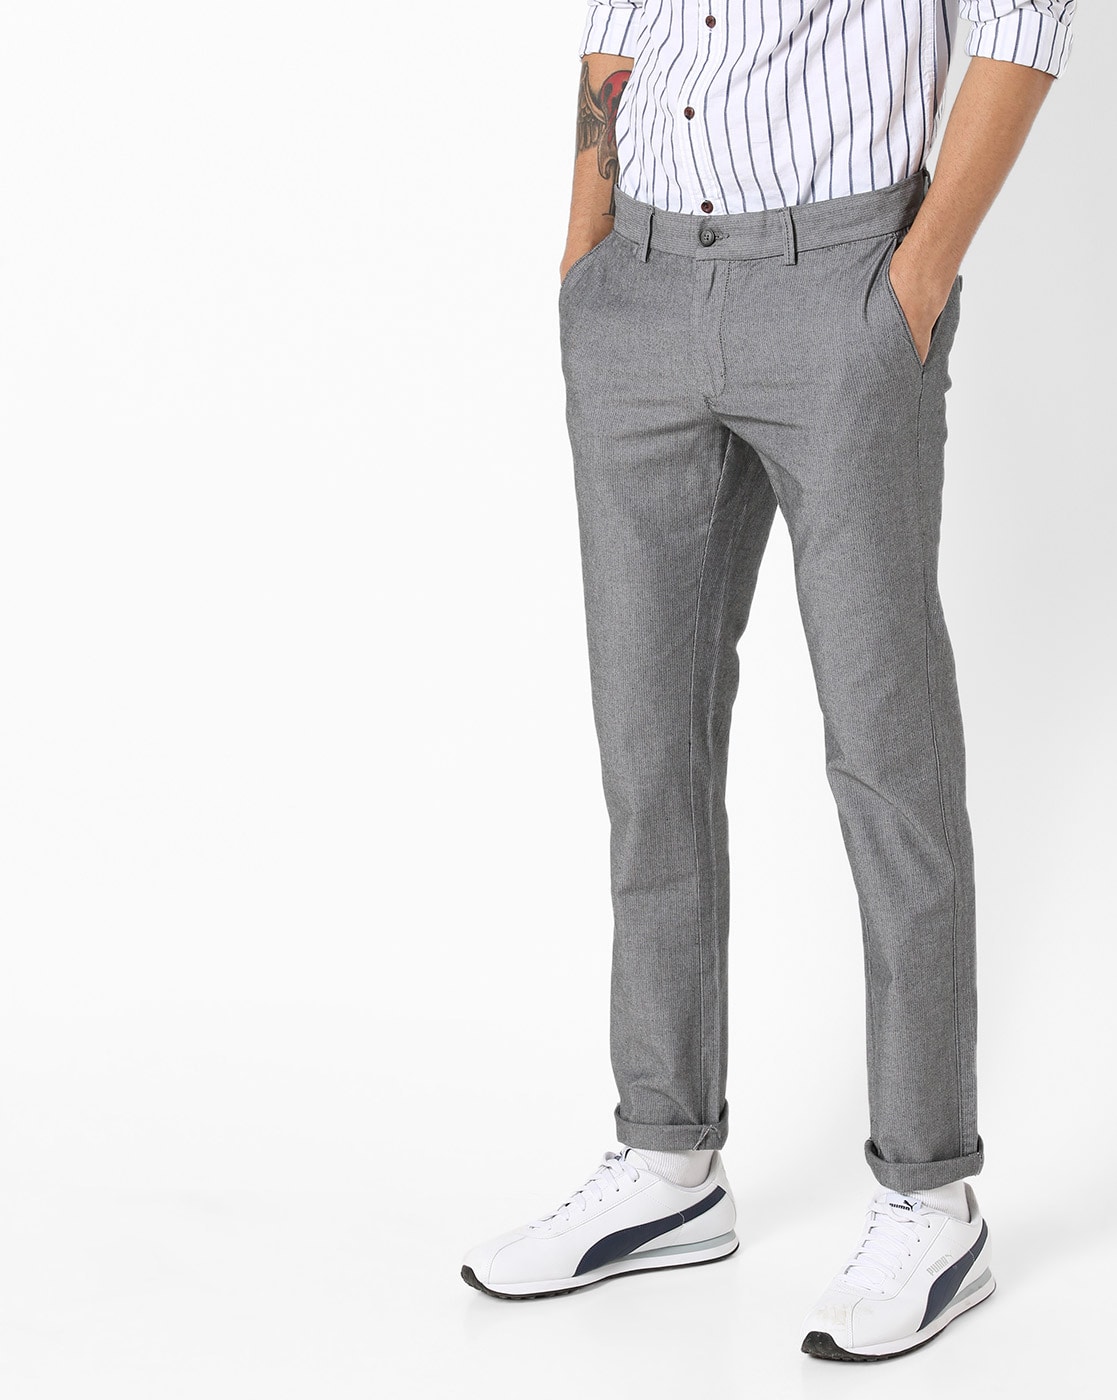 Steel Grey Uniform Pant  28